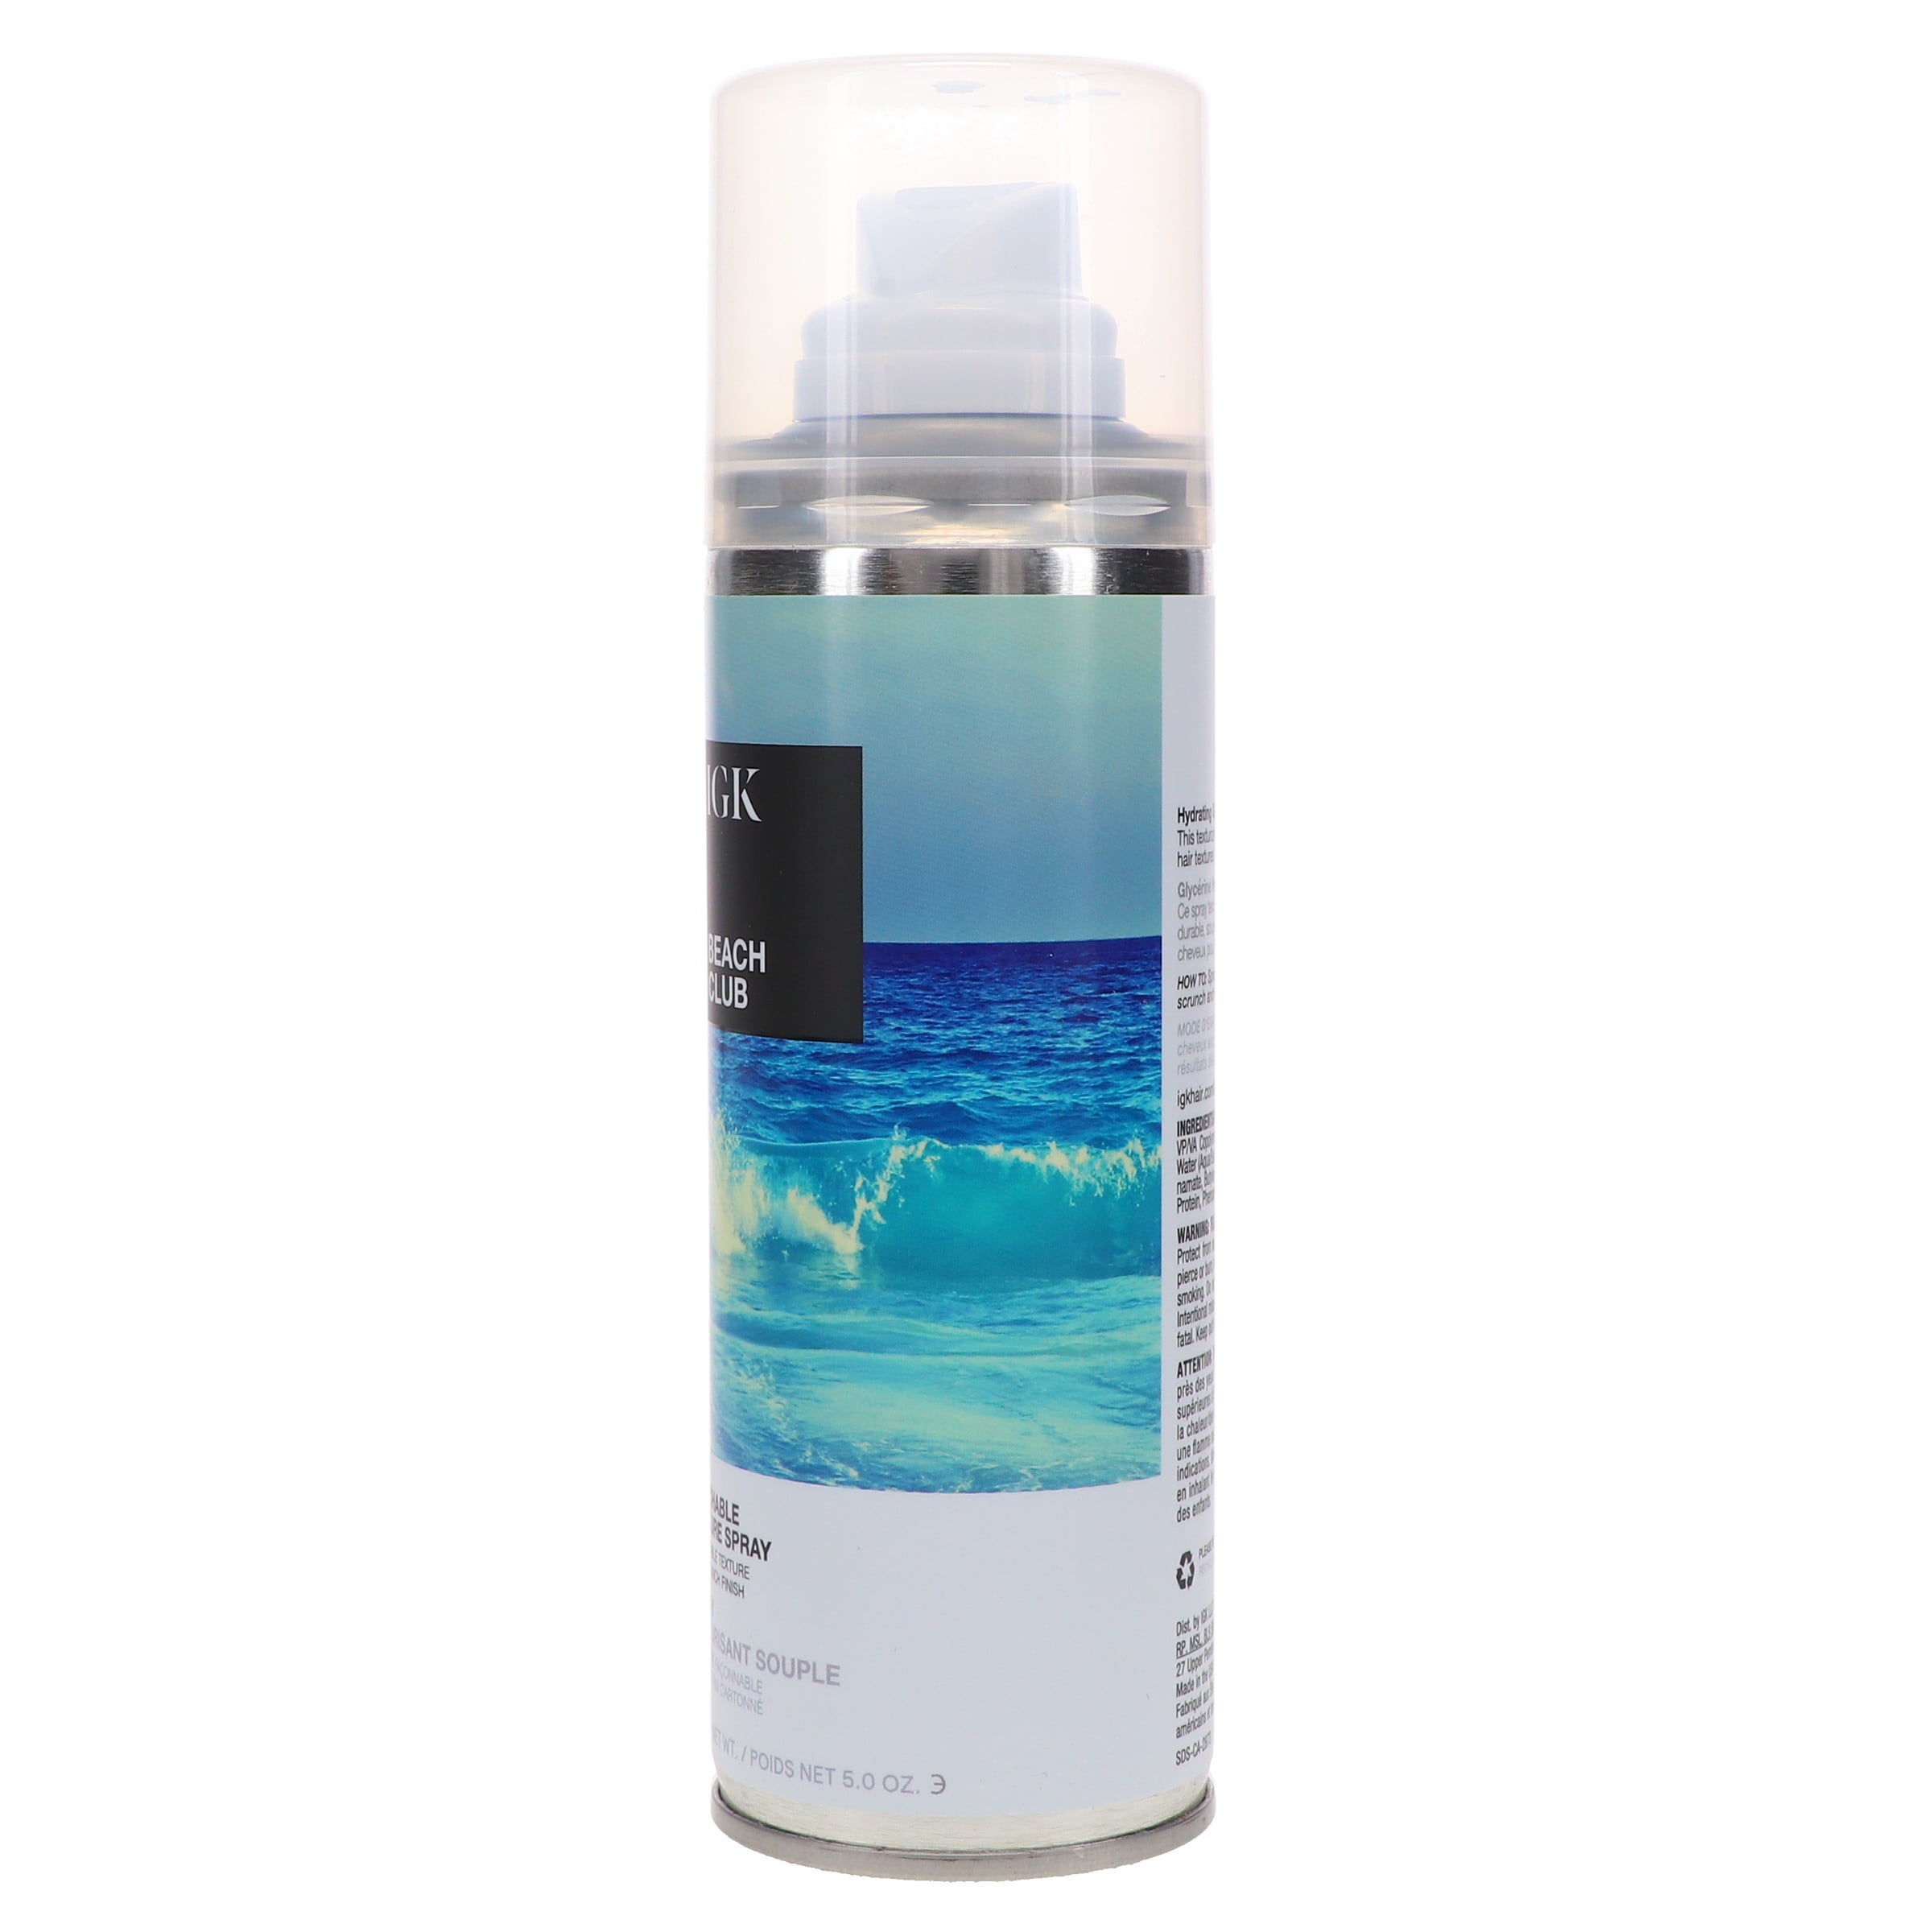 Beach Club Volume Texture Spray - IGK, Ulta Beauty